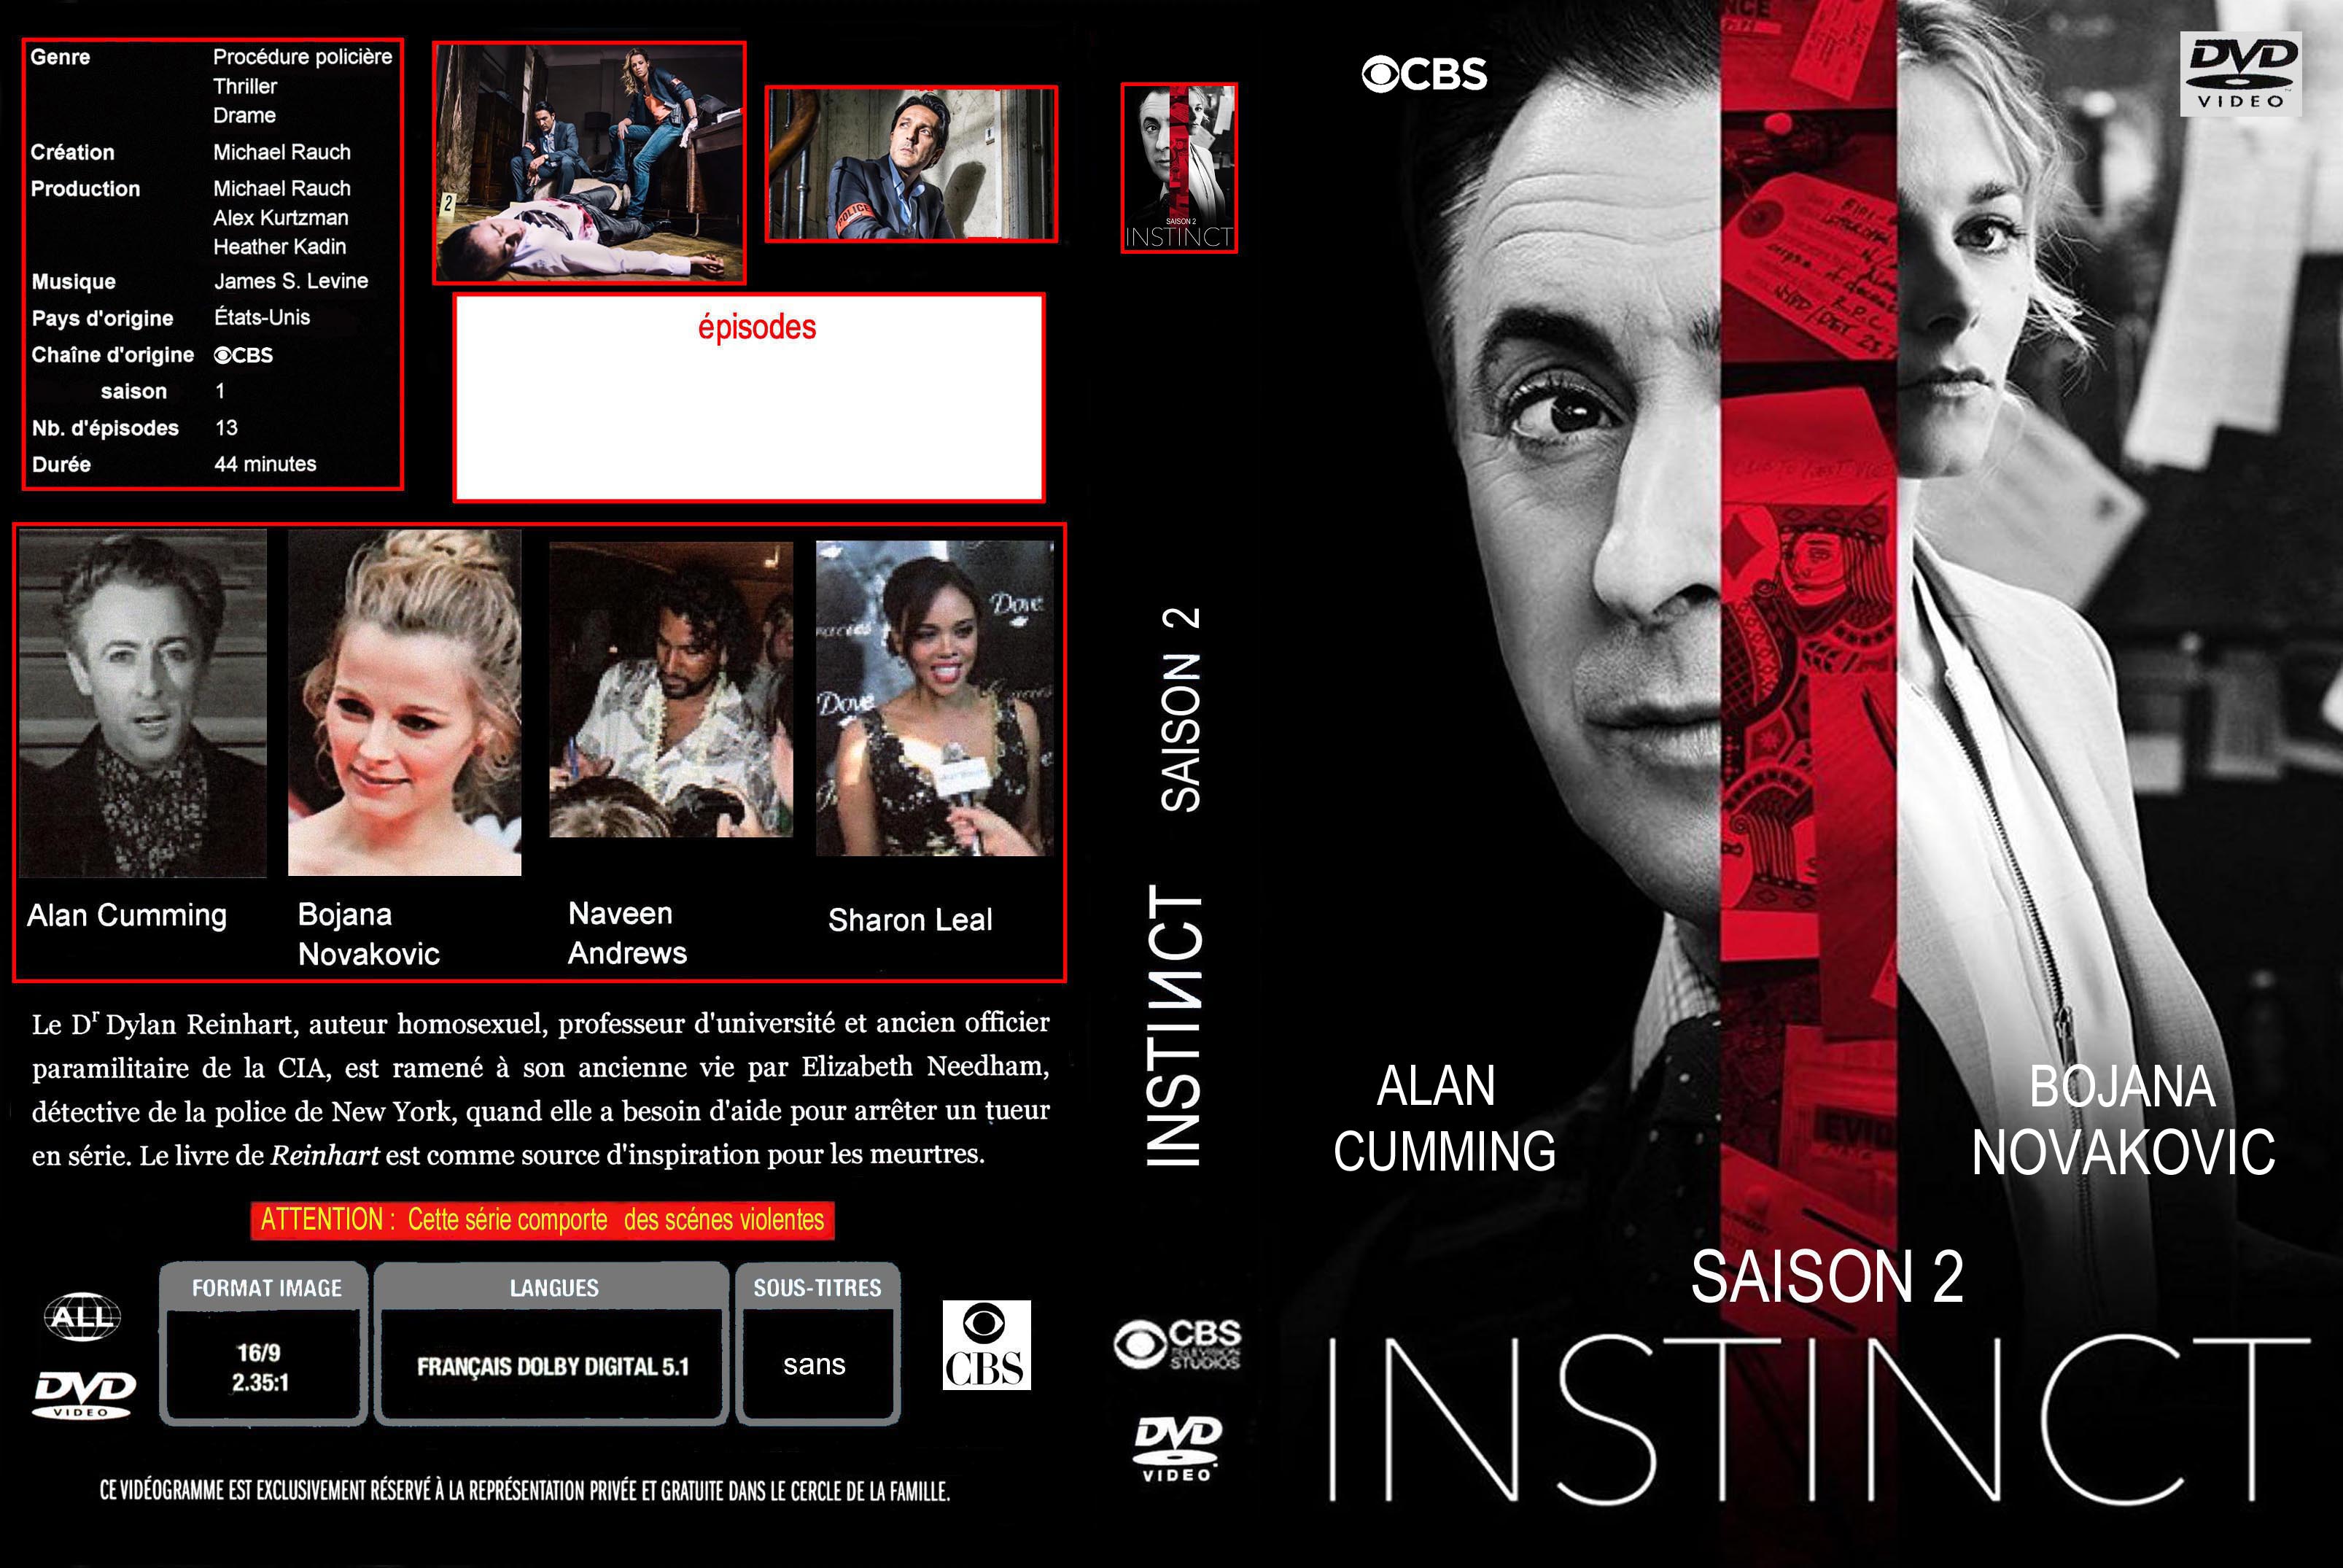 Jaquette DVD Instinct saison 2 custom